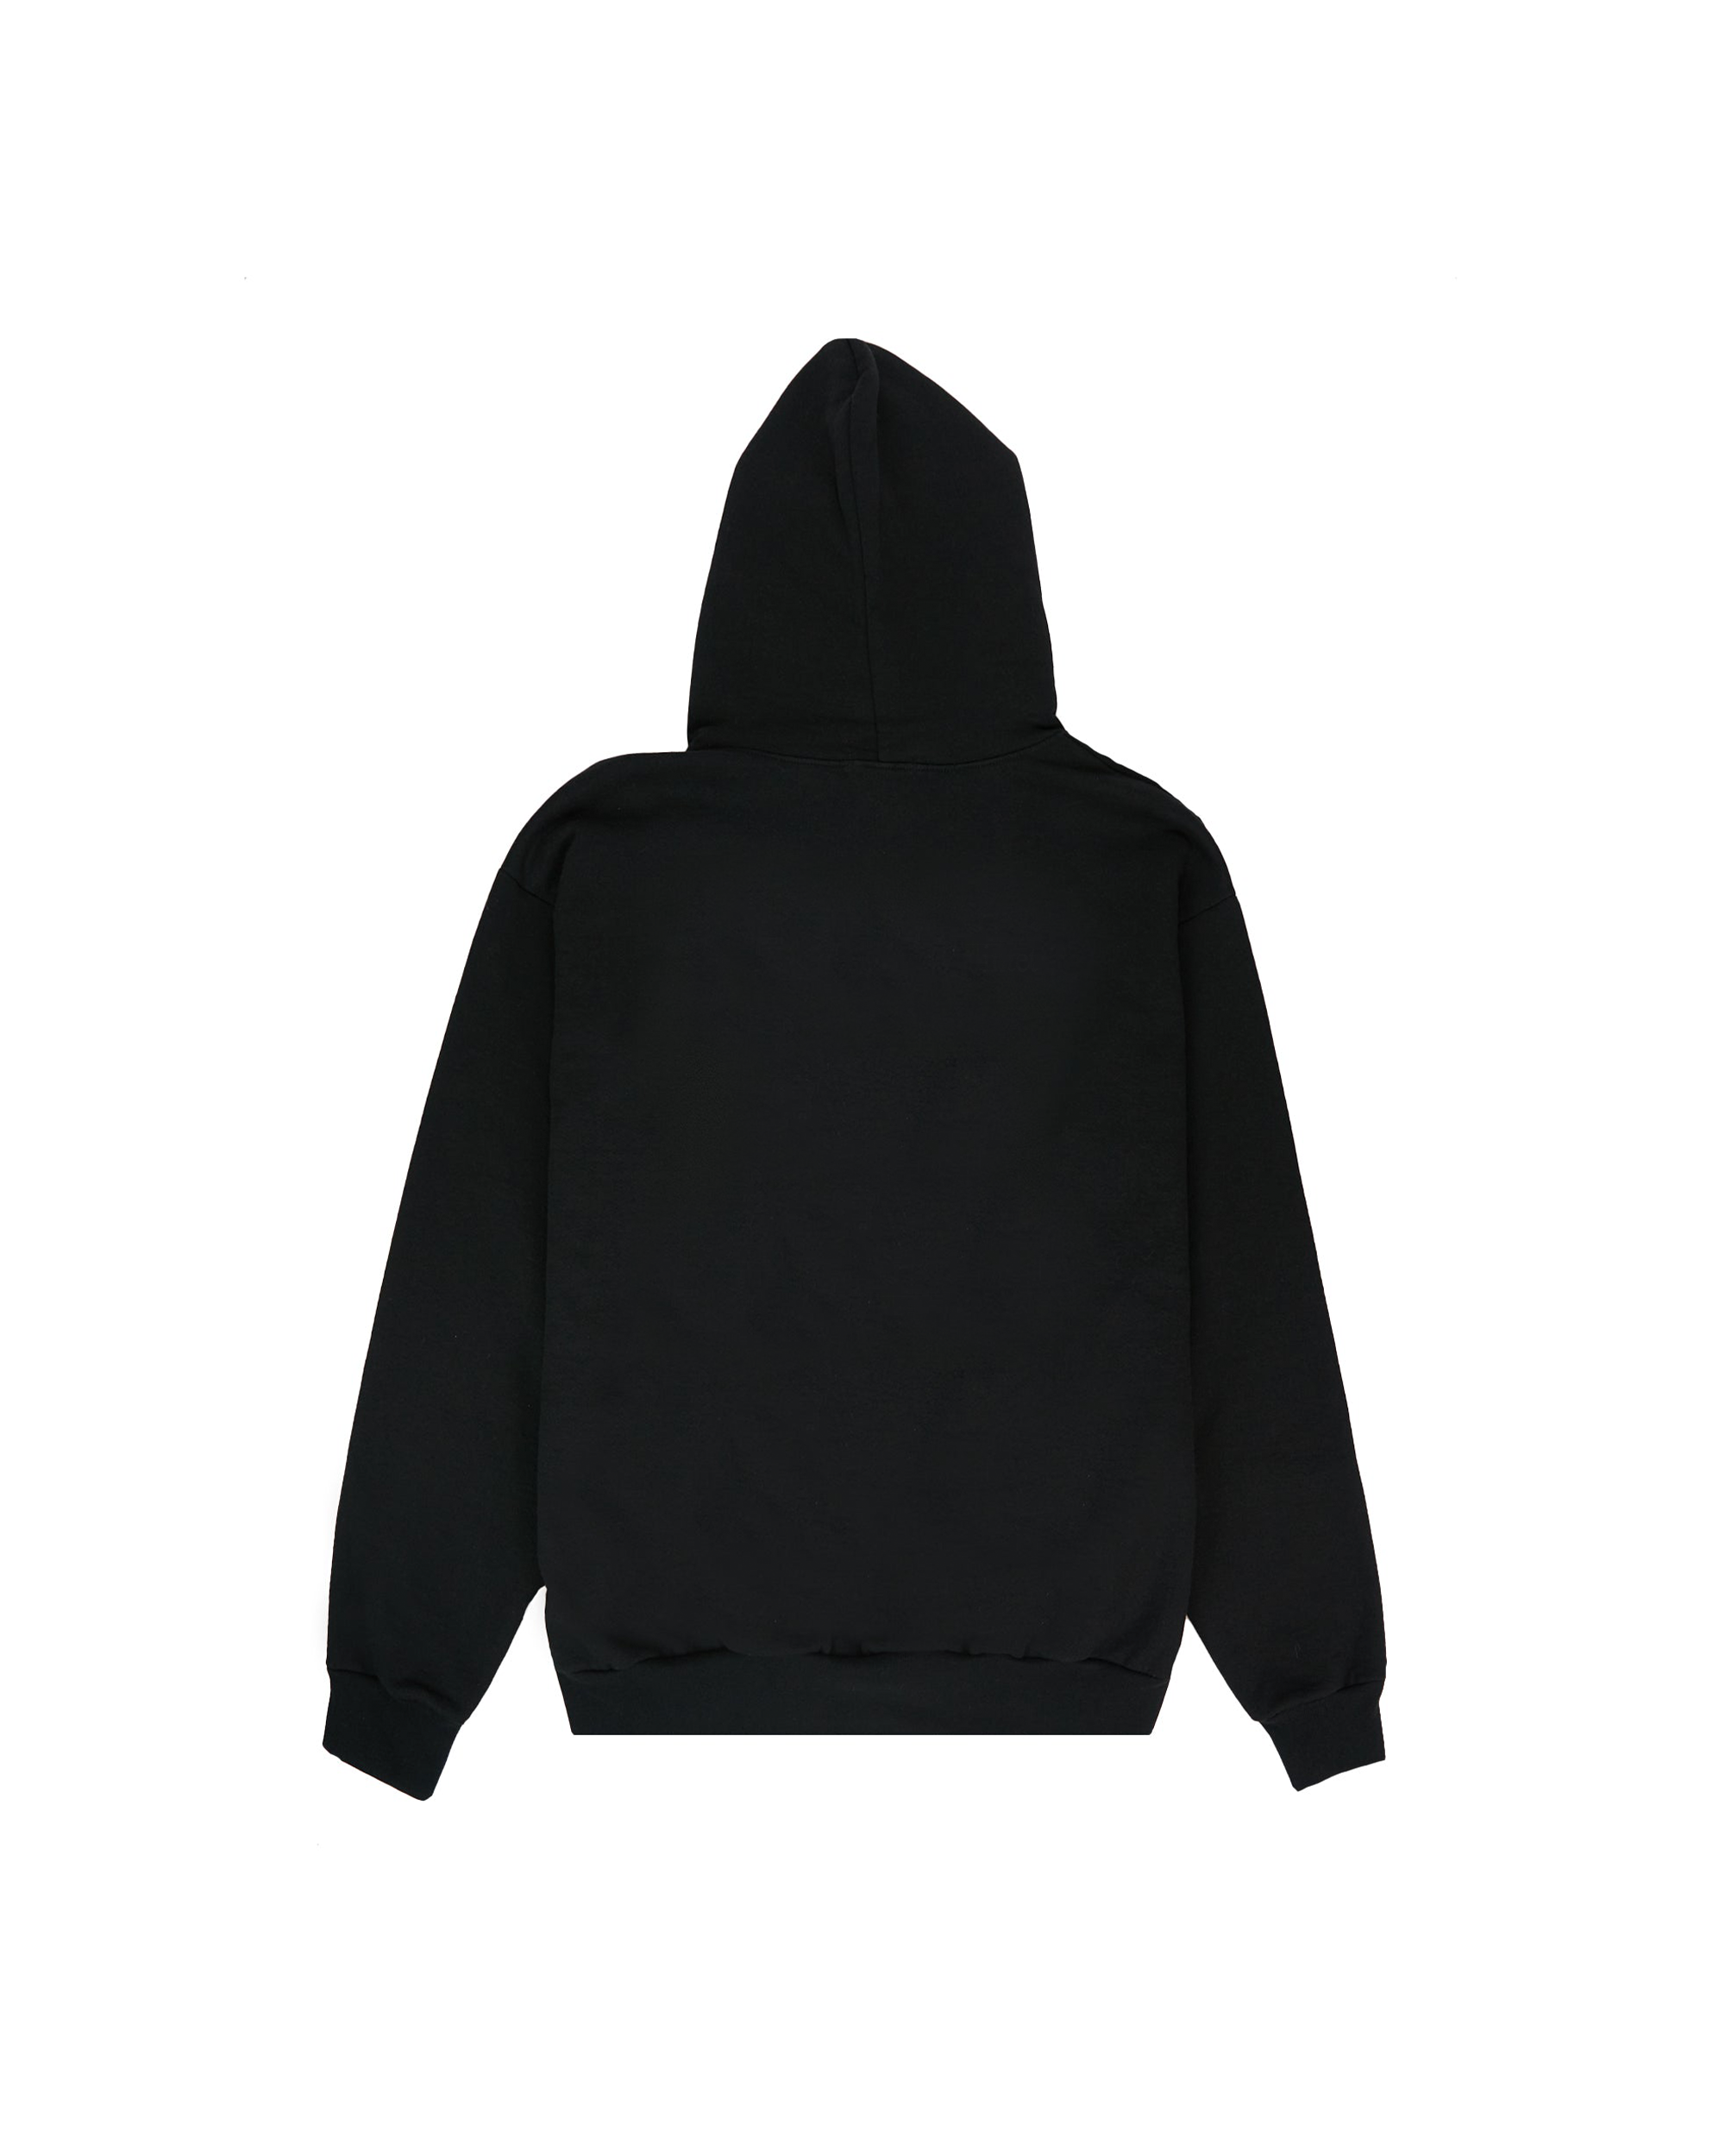 Refurbishing Hooded Sweatshirt - Black